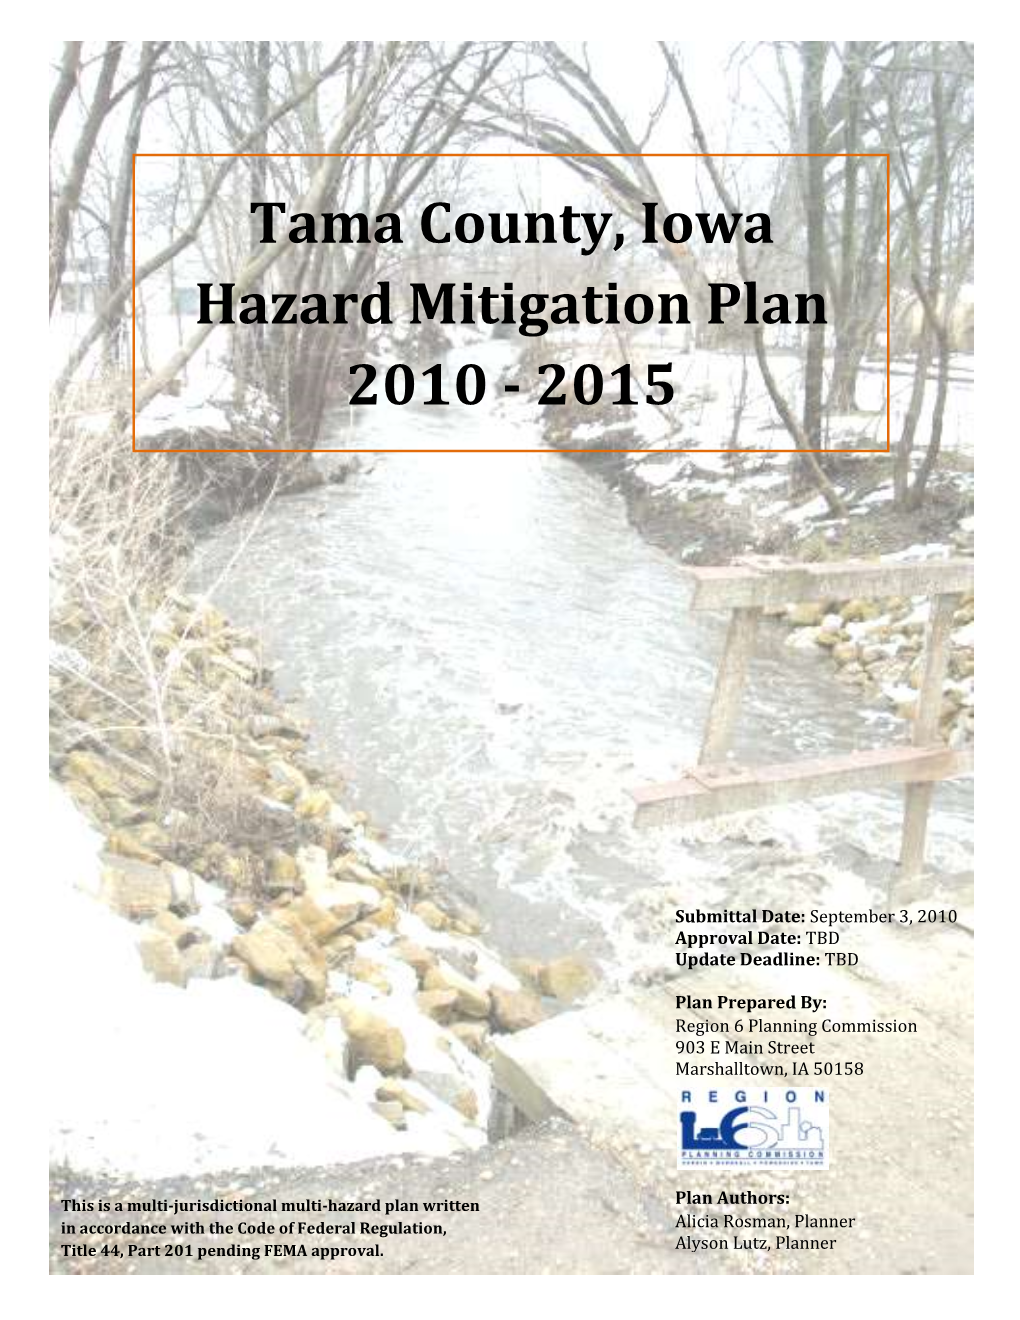 Tama County Multi-Jurisdictional Multi-Hazard Mitigation Plan